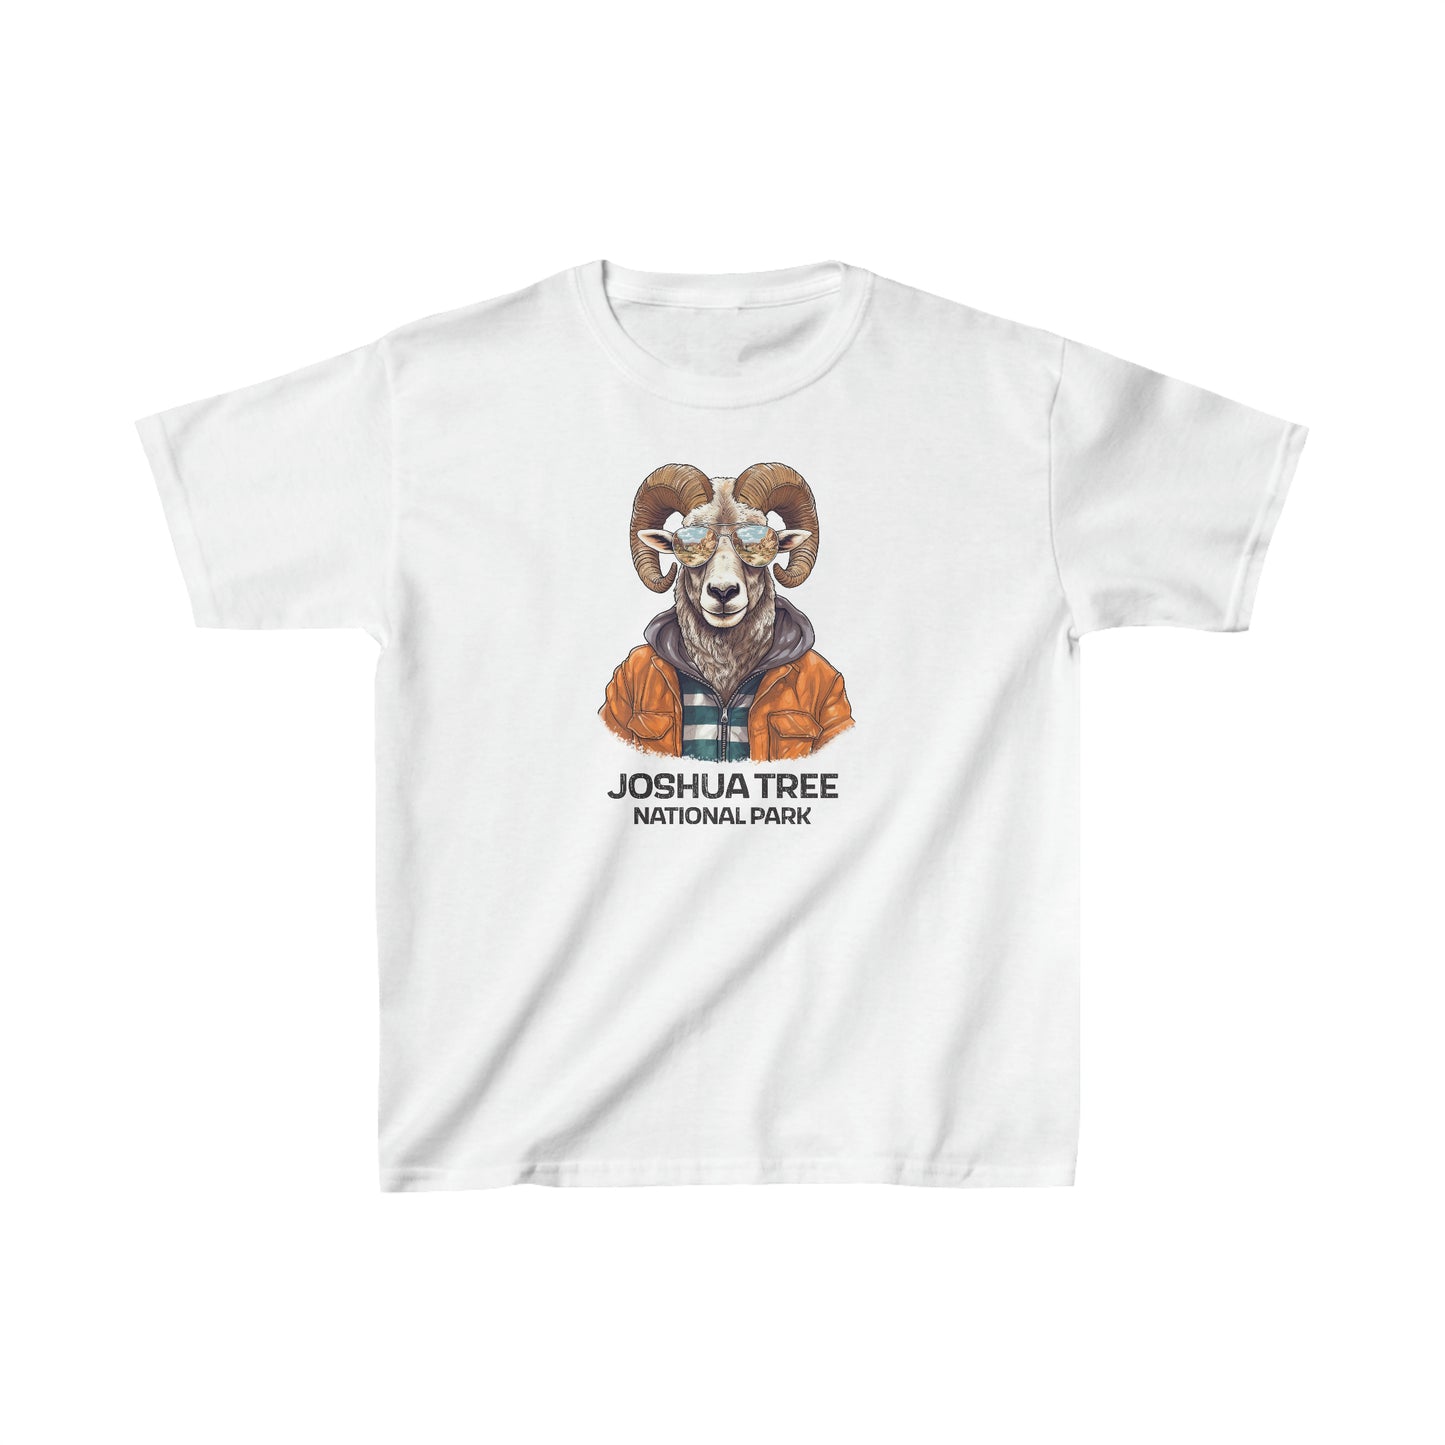 Joshua Tree National Park Child T-Shirt - Cool Bighorn Sheep